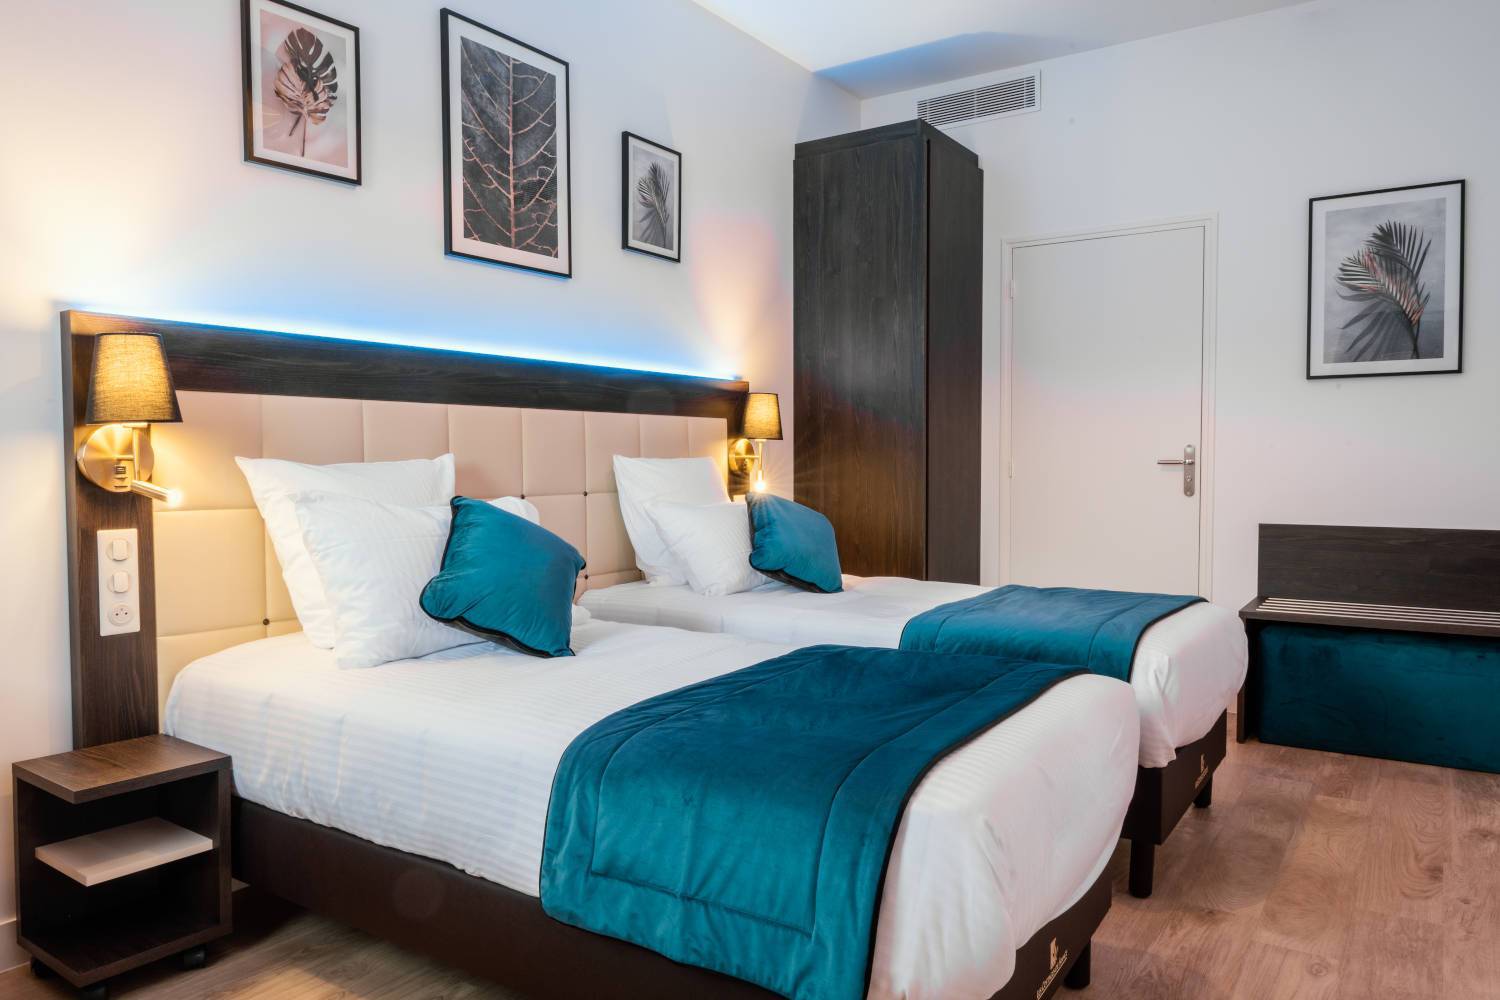 Double beds | Les Cottages de France, hotel near CDG airport and Villepinte